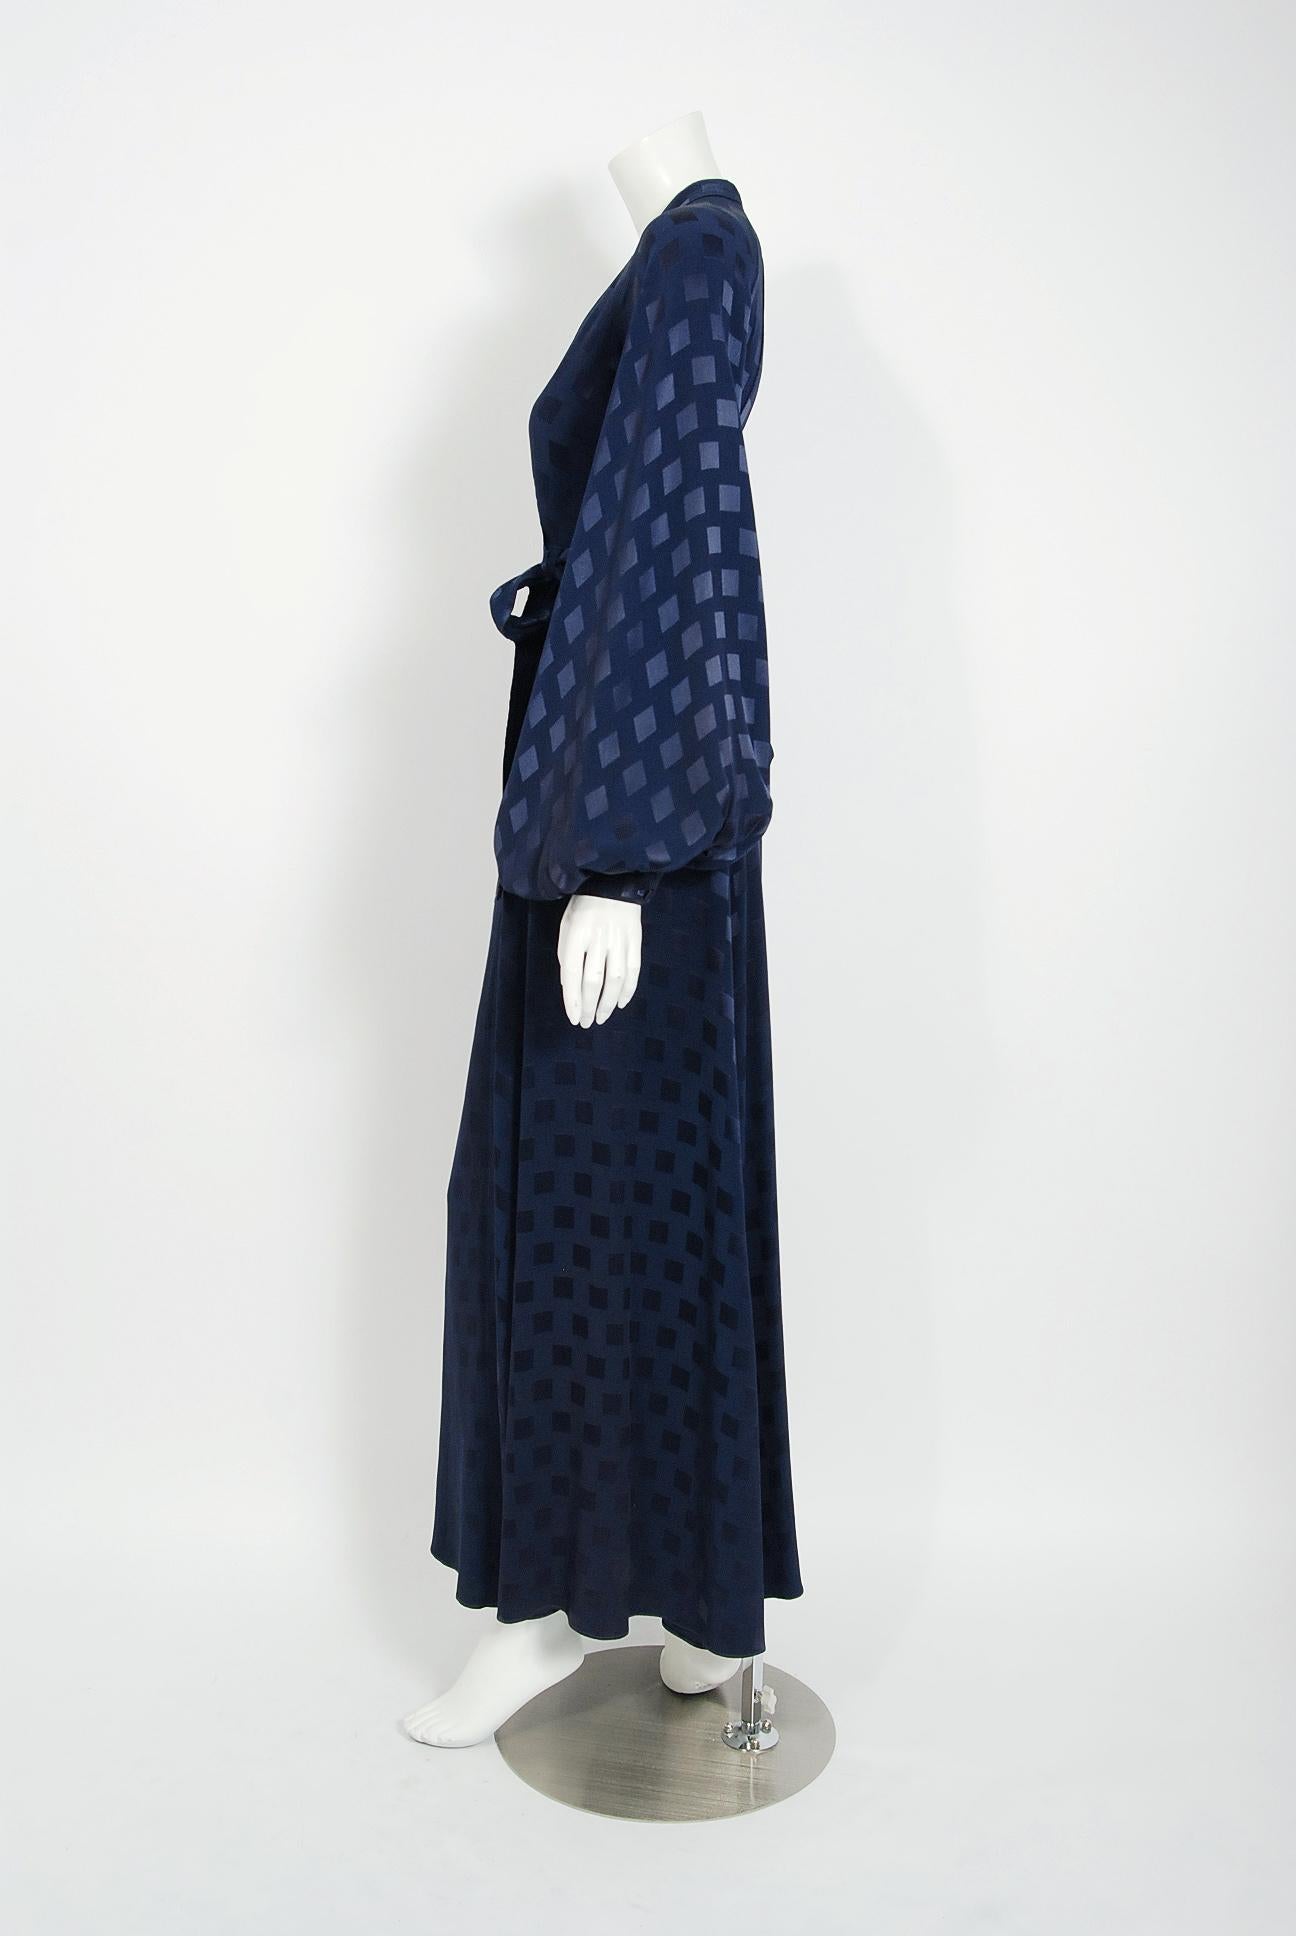 Women's Ossie Clark for Quorum Navy Deco Print Satin Backless Billow-Sleeve Gown, 1972  